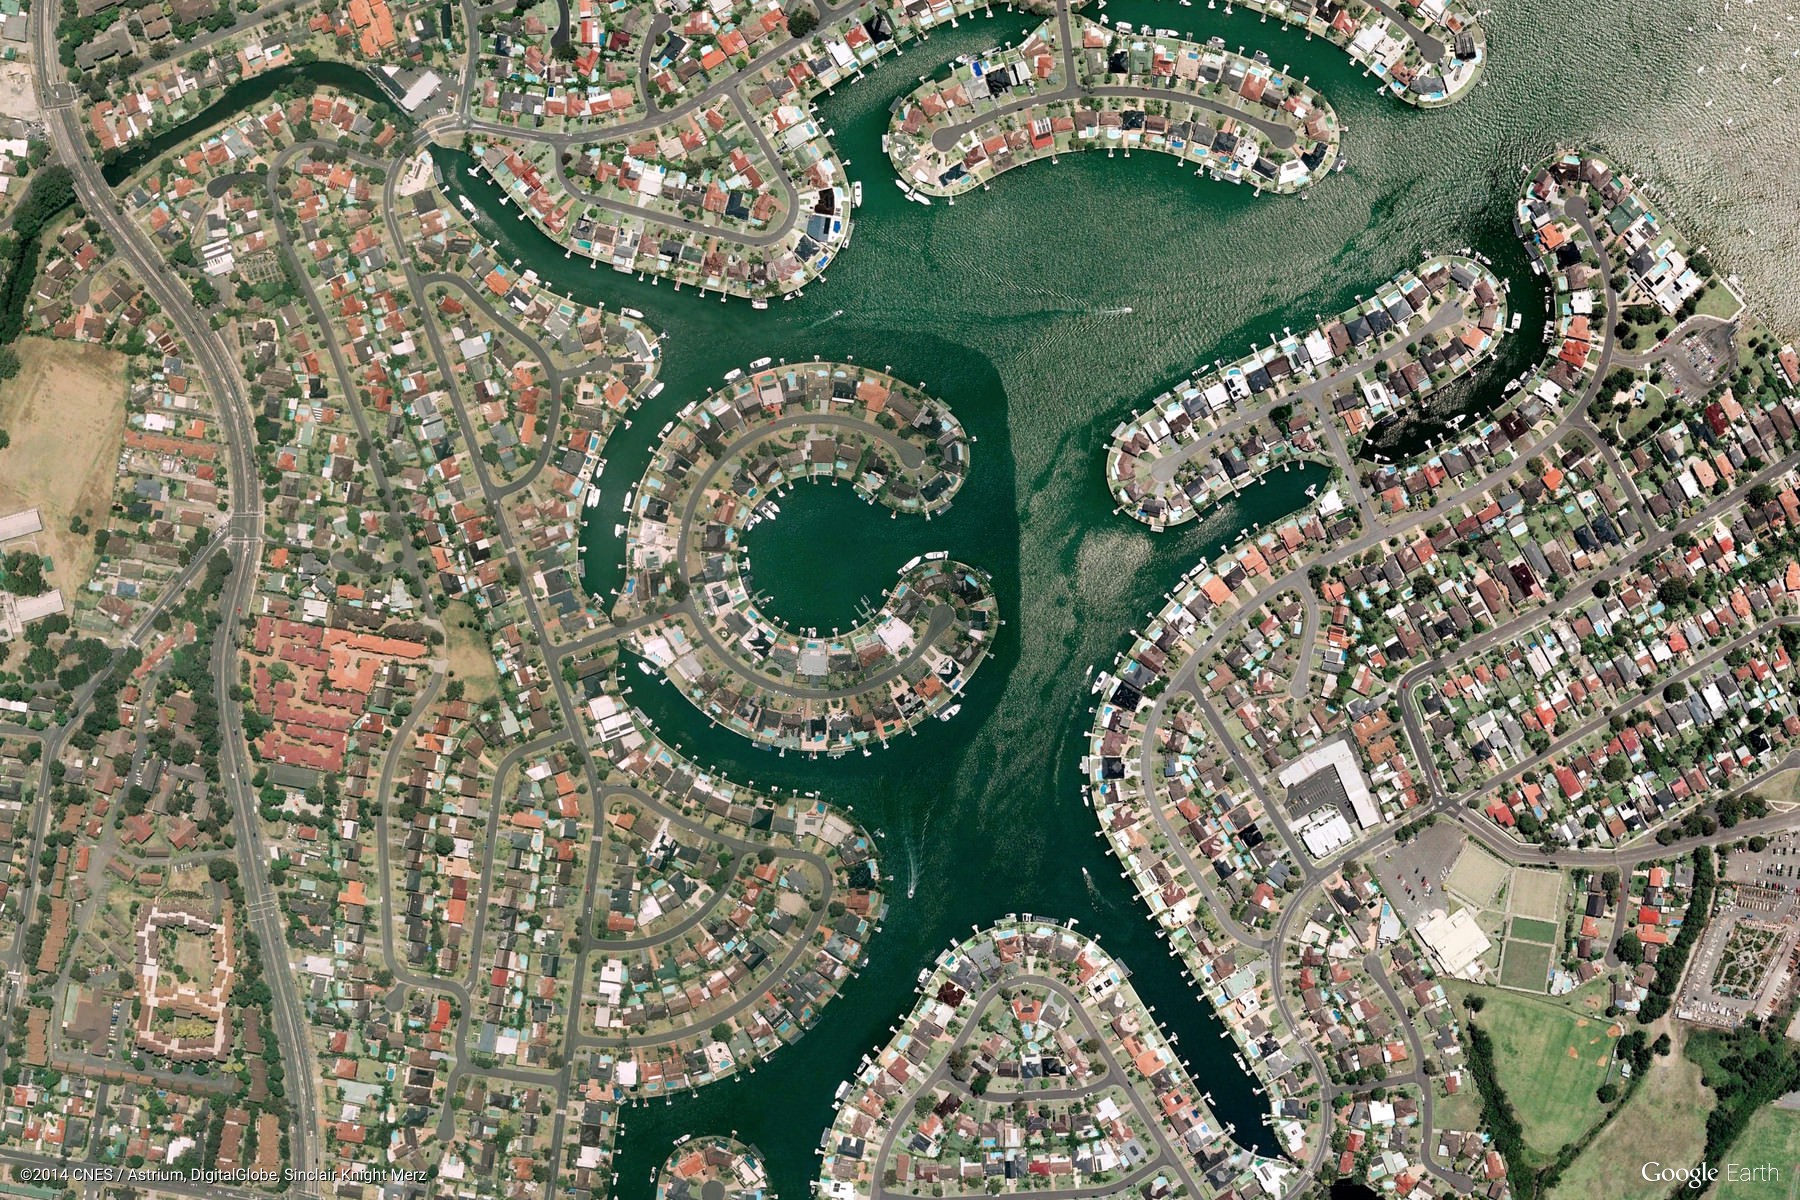 General 1800x1200 Google nature satellite photo landscape watermarked Australia